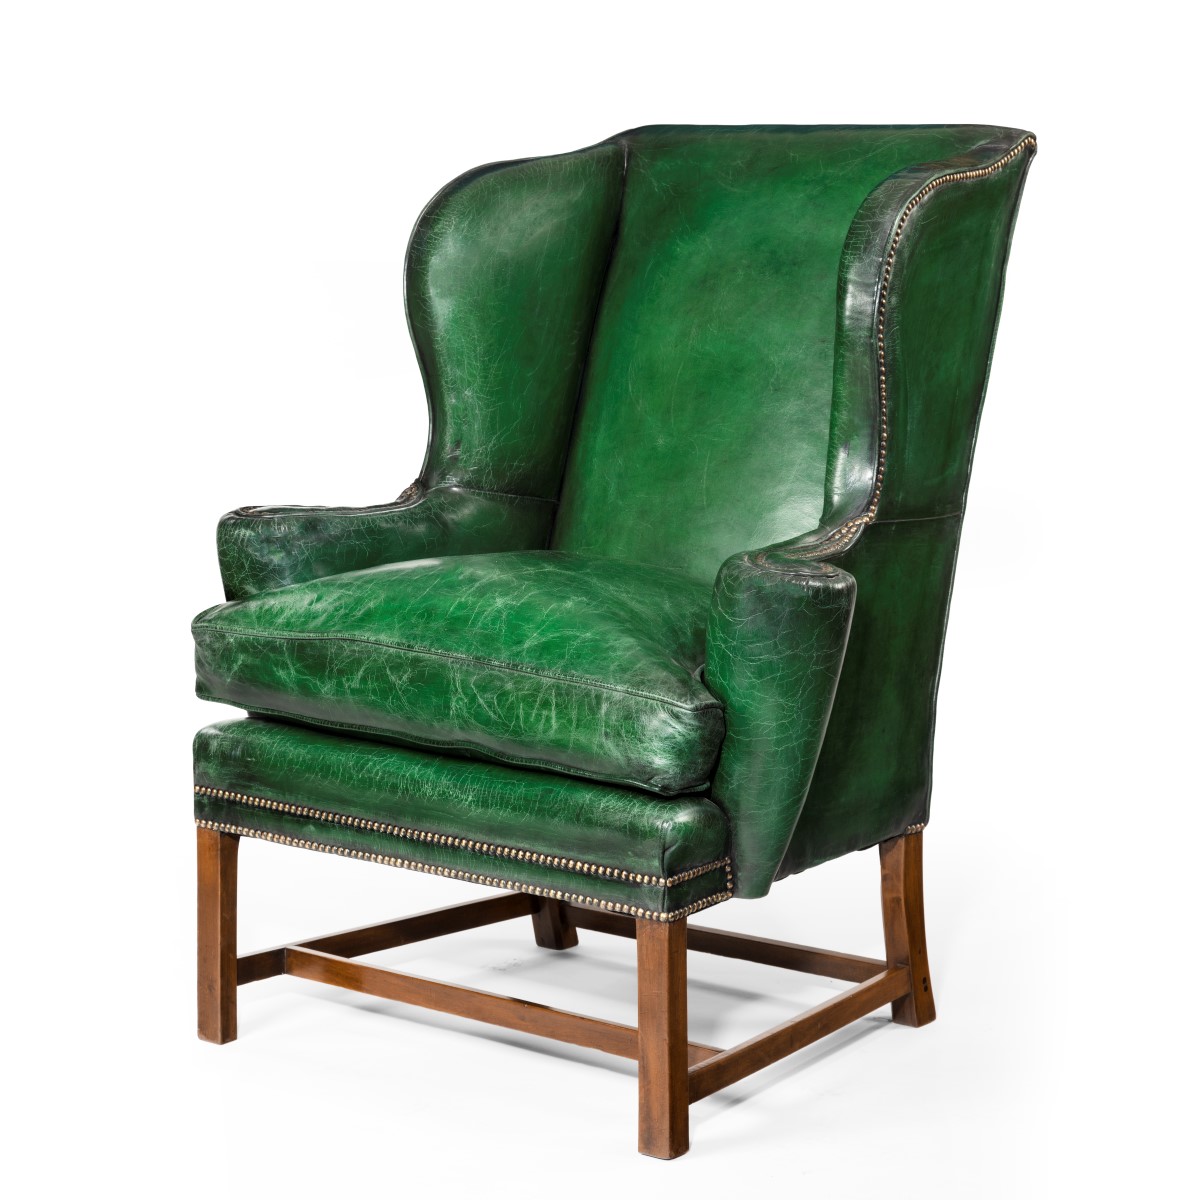 Green antique armchair